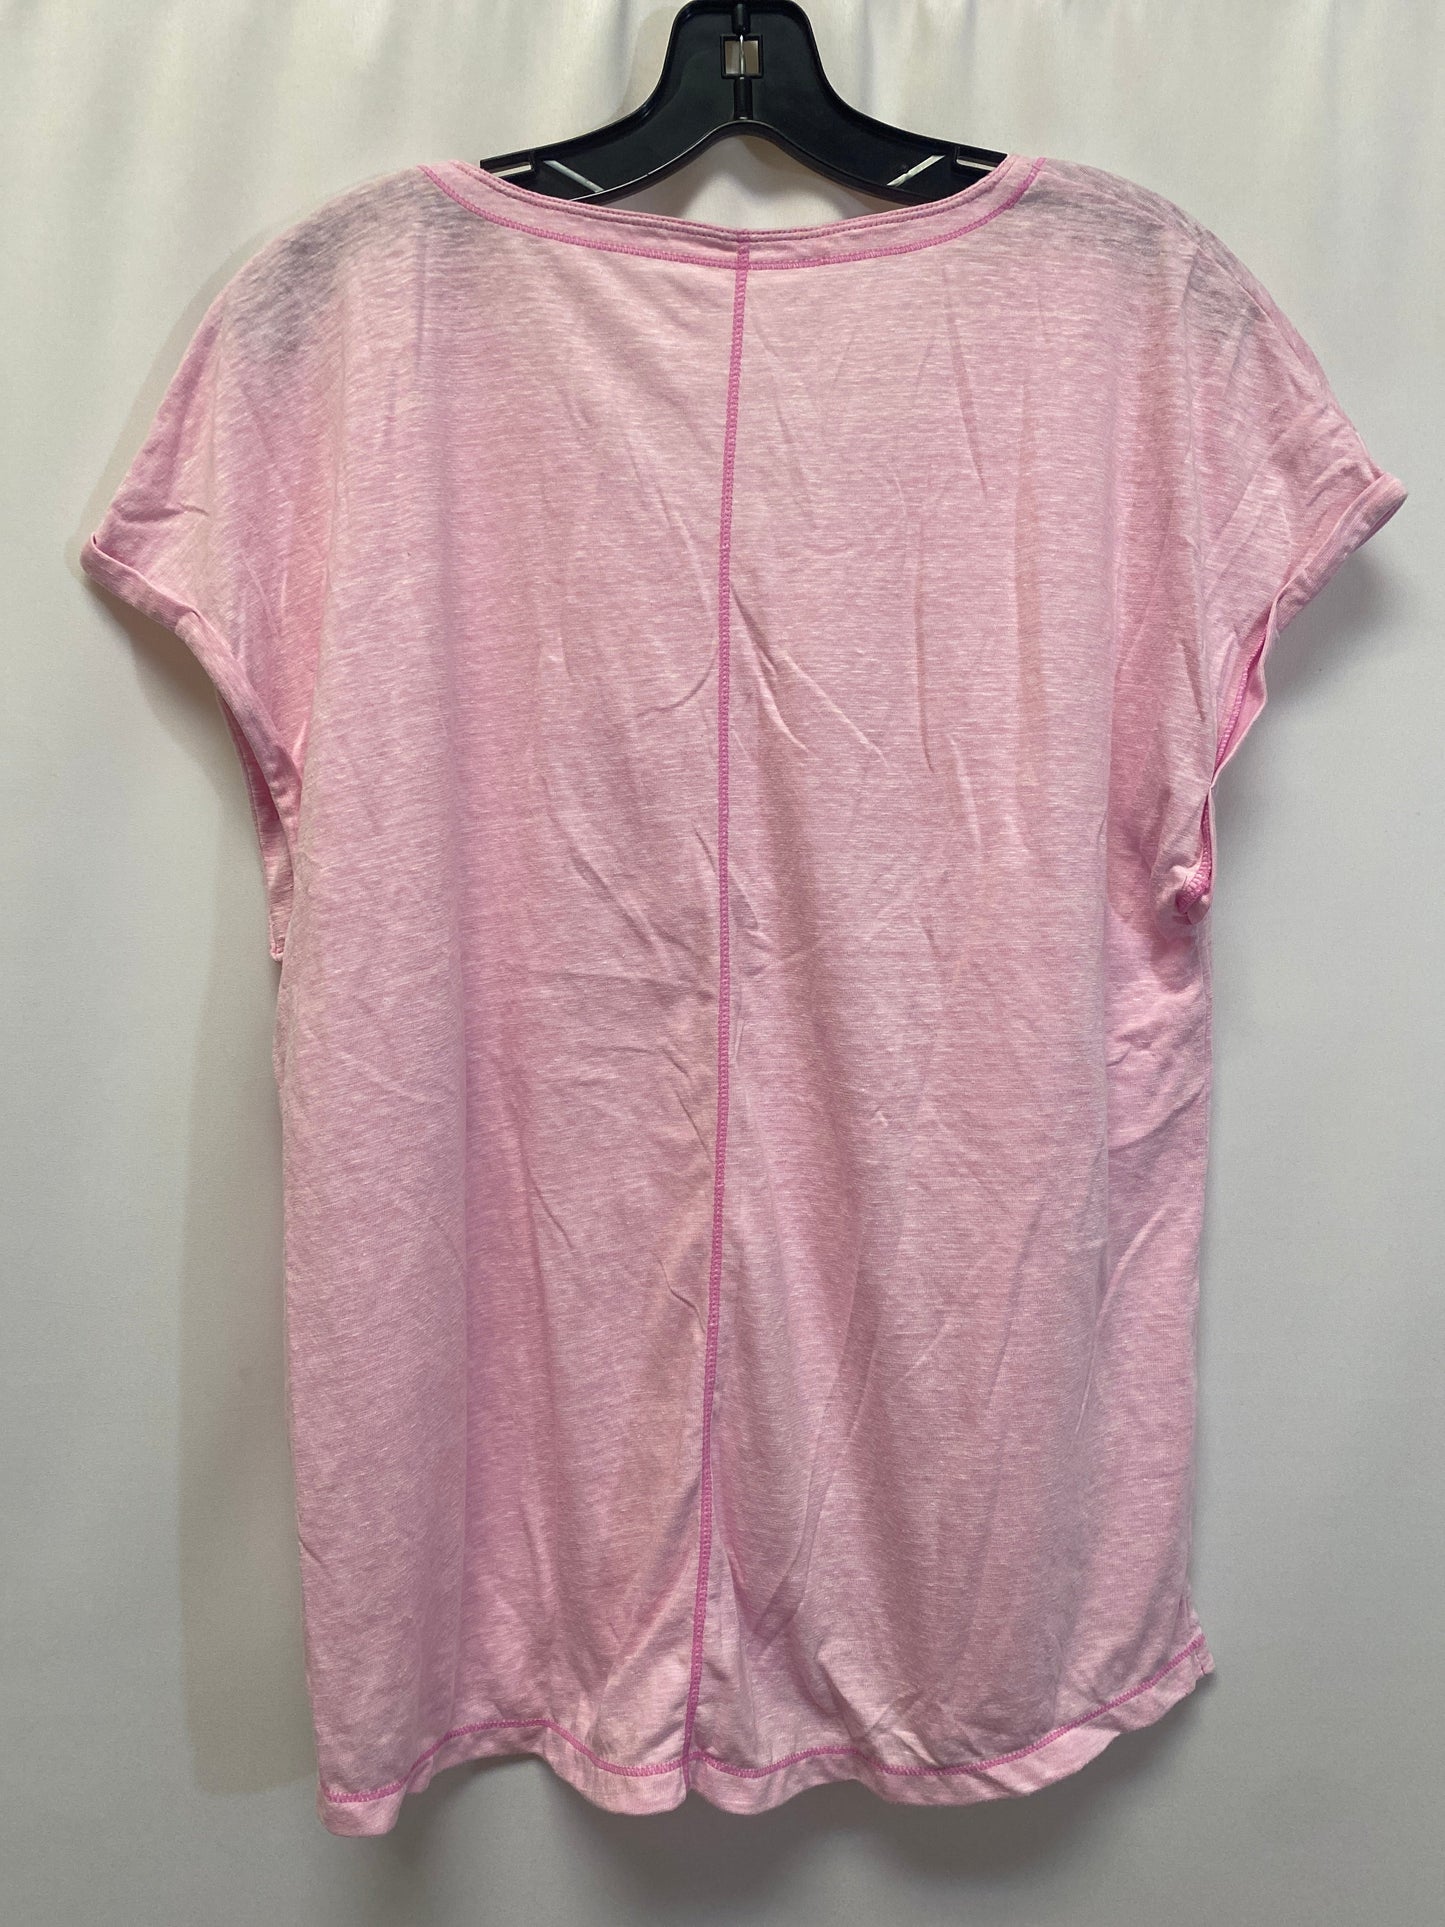 Pink Top Short Sleeve Talbots, Size Xl